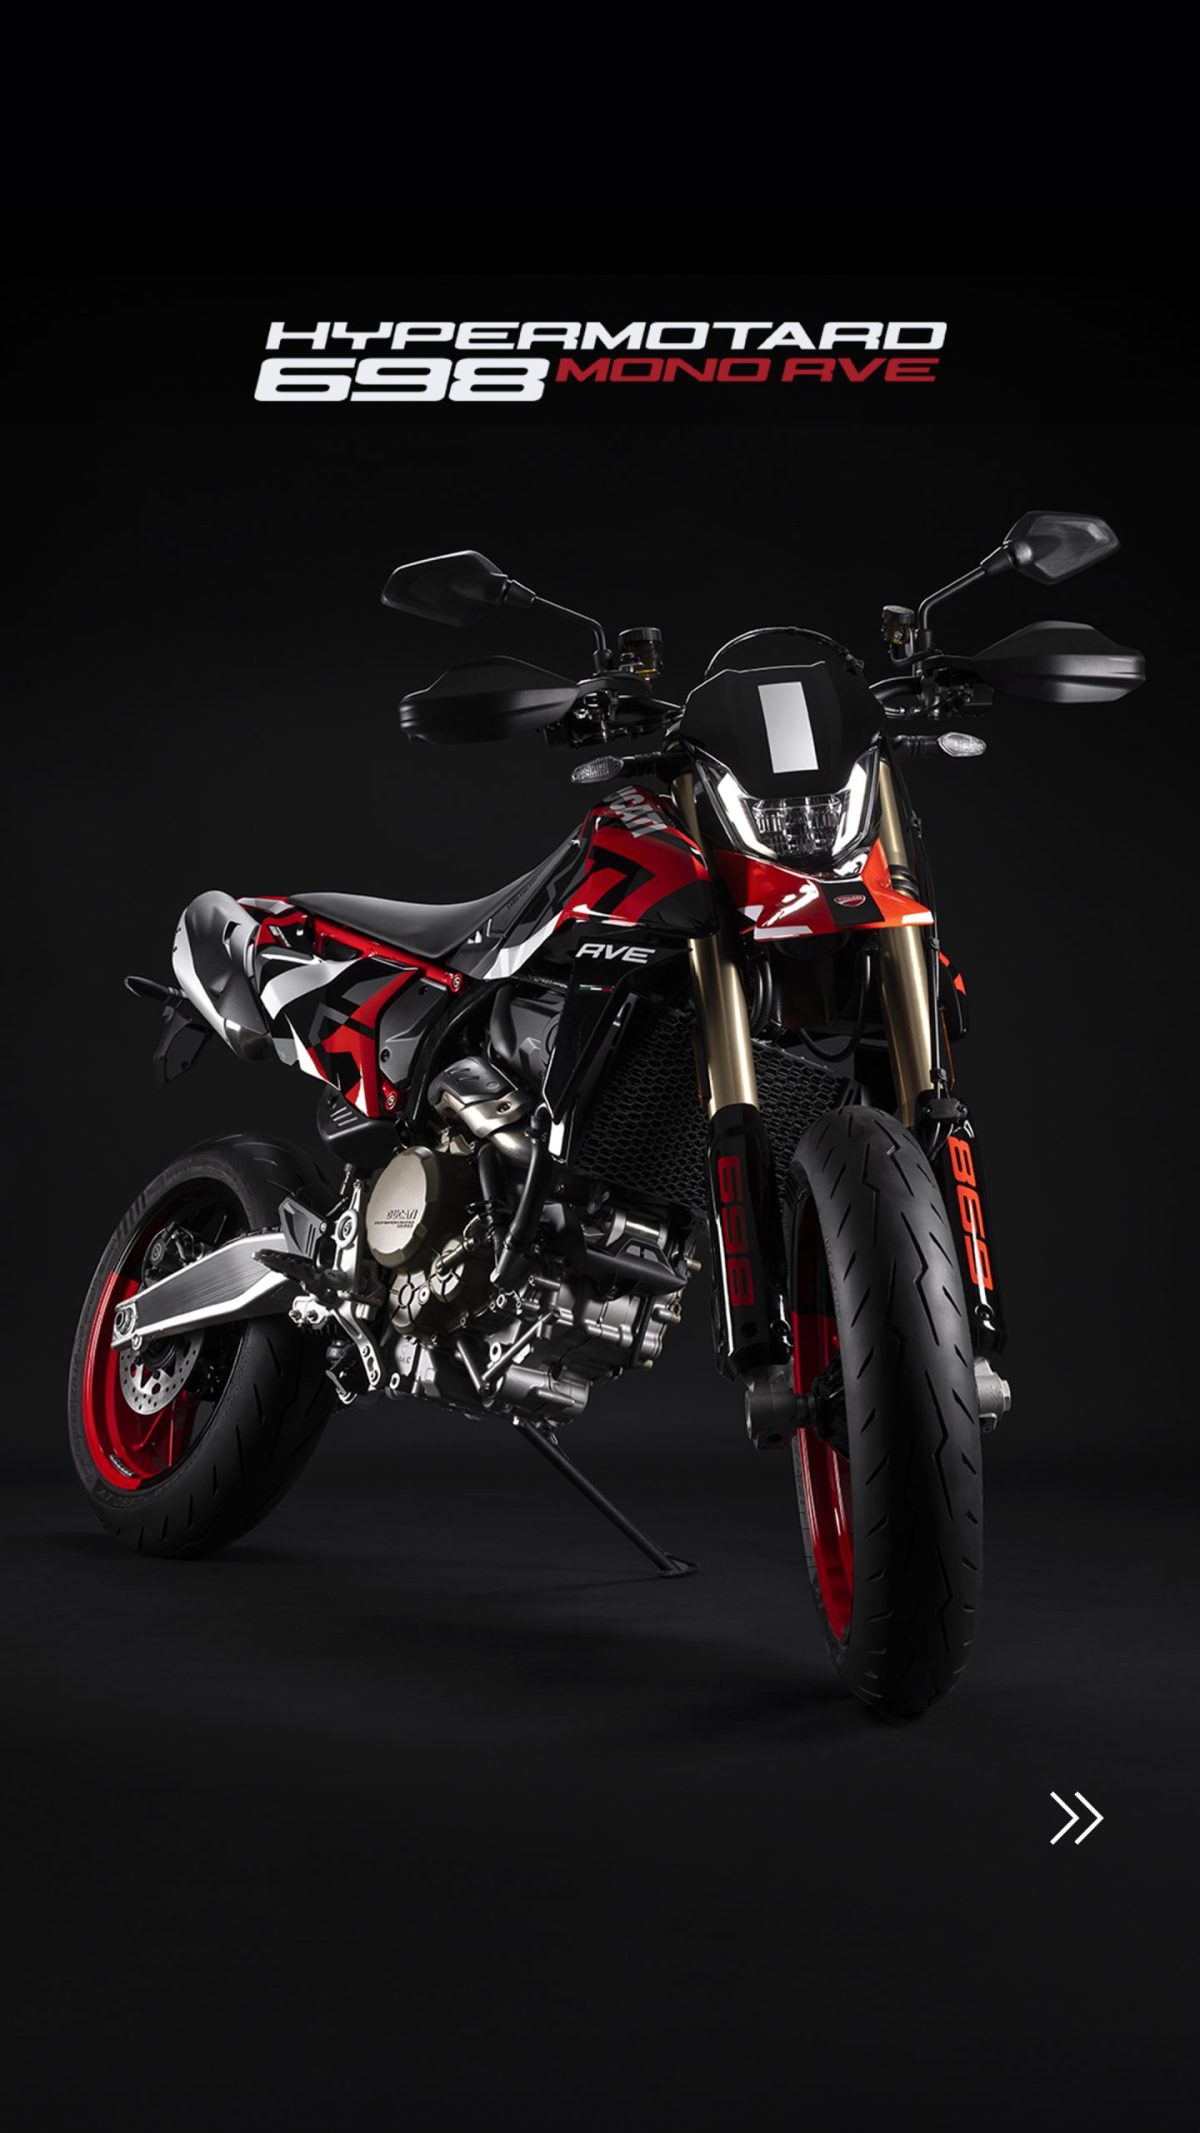 Ducati ประเทศไทย เผยโฉมรถรุ่นใหม่ Hypermotard 698 mono เปิดตัวสุดปังด้วยการคว้ารางวัลมอเตอร์ไซค์ที่สวยที่สุดแห่งปี จากงาน EICMA 2023 ประเทศอิตาลี